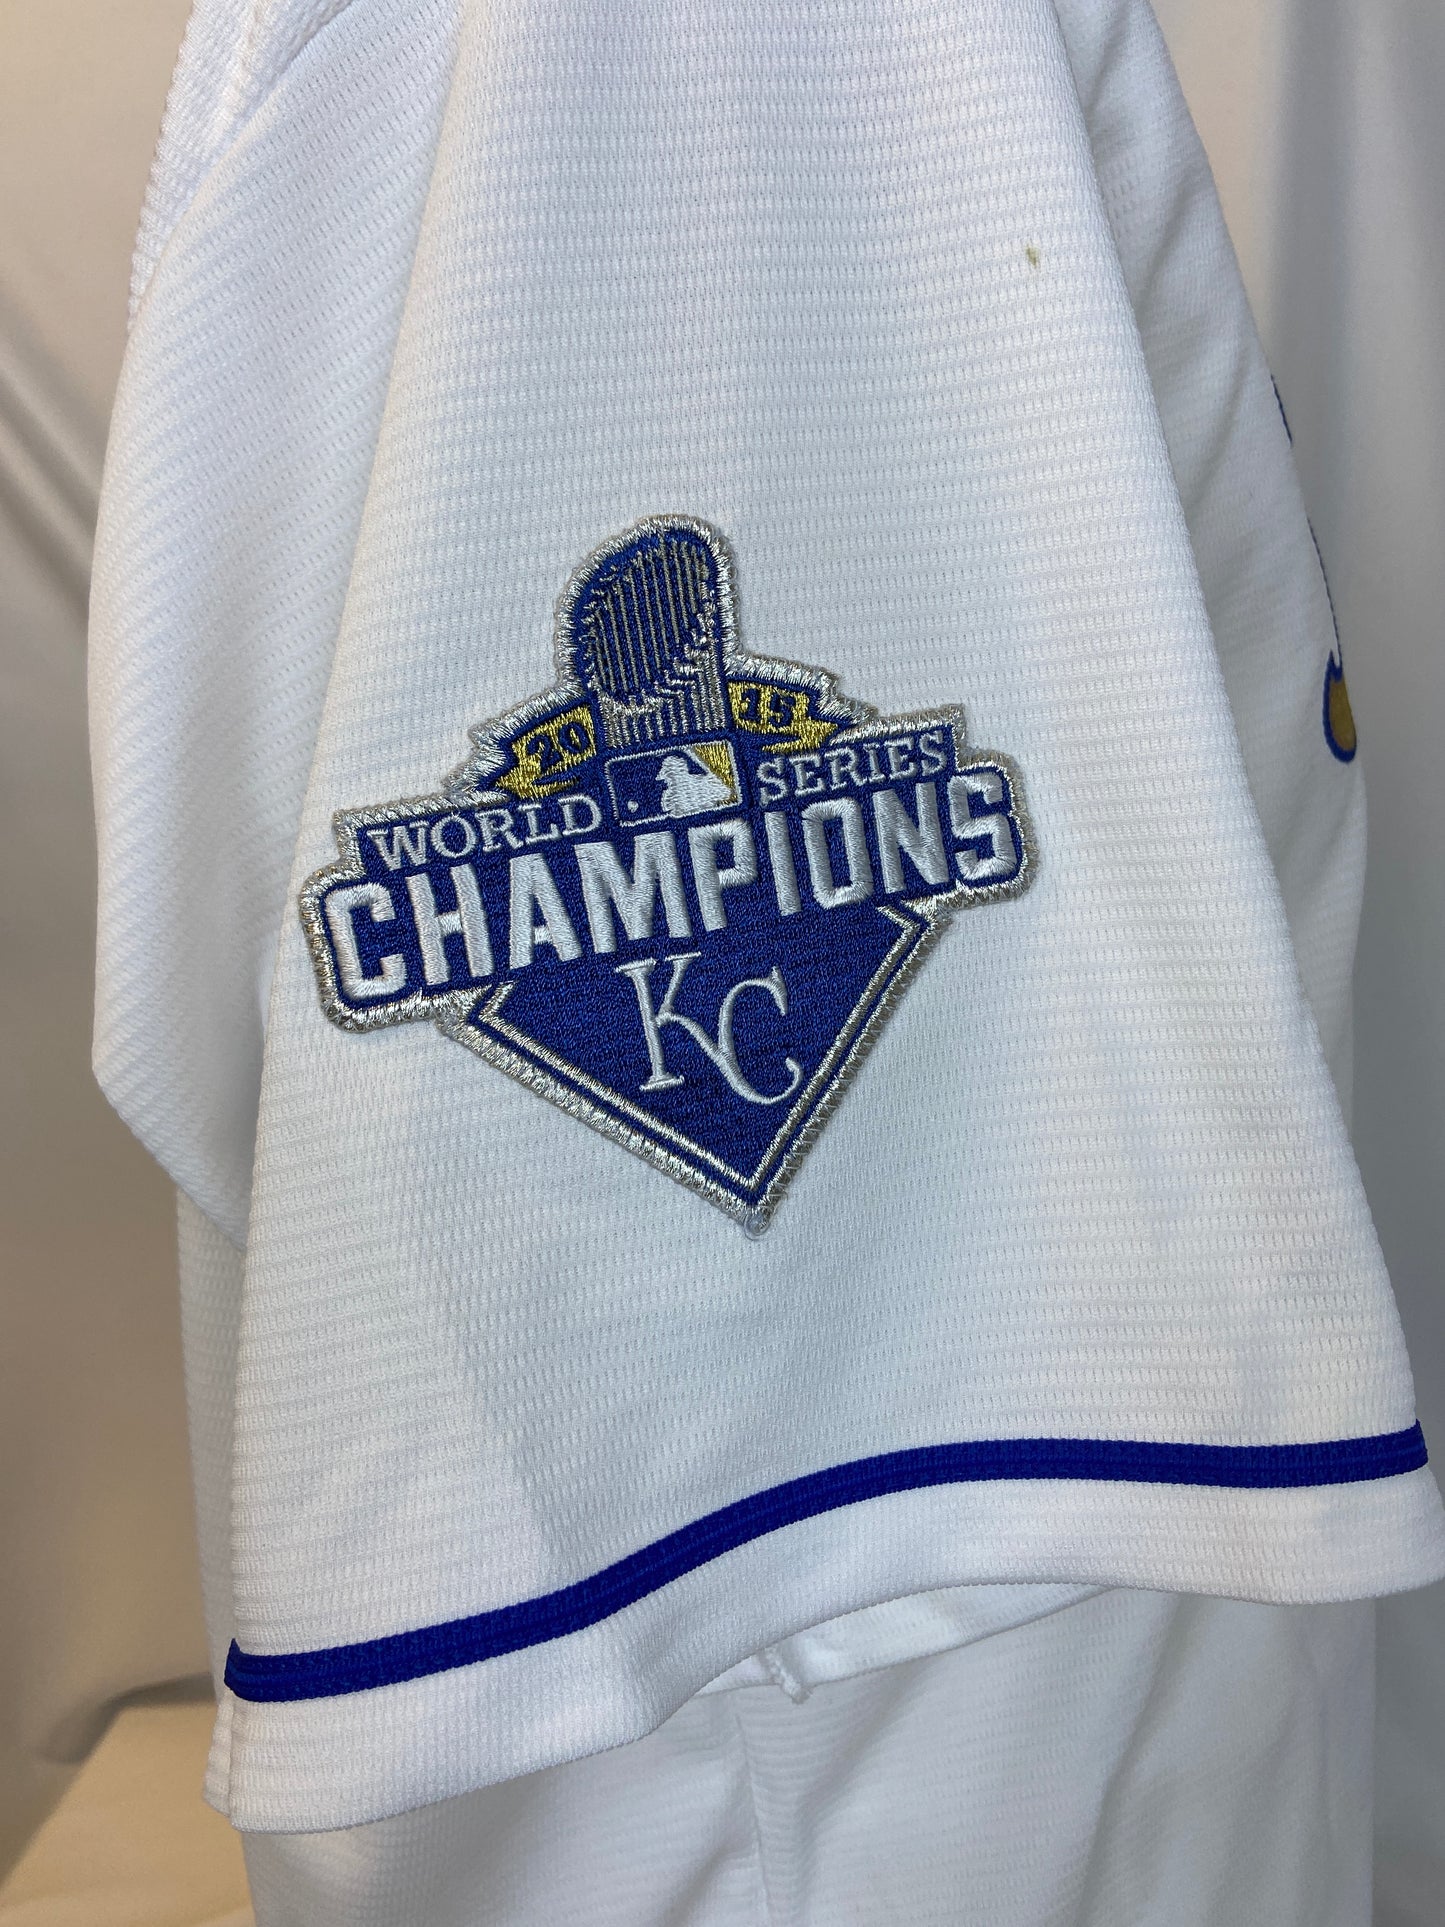 Majestic Genuine League Merchandise XL White KC Royals Shirt NWT